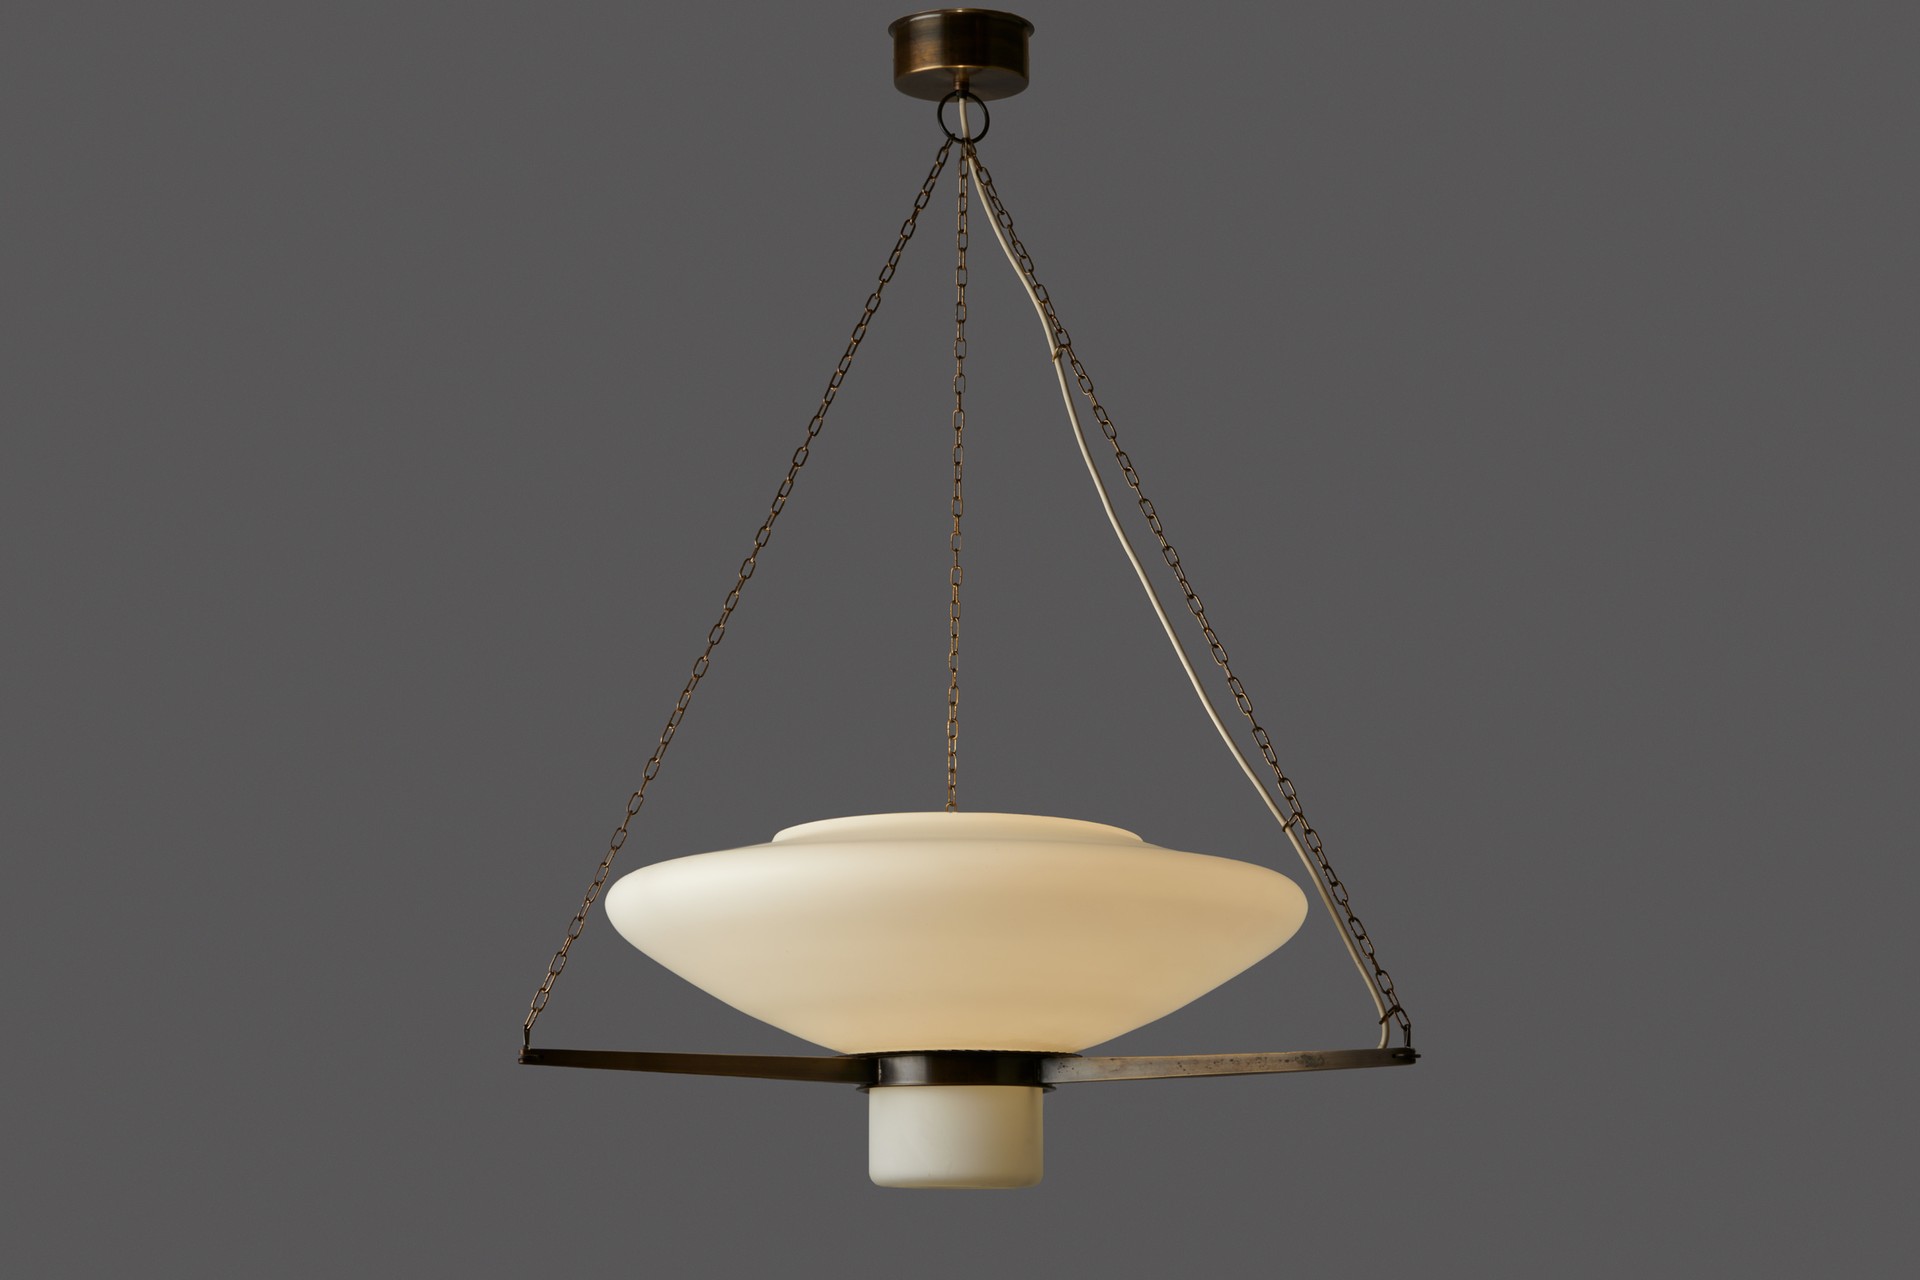 Gunnar Asplund – Ceiling Lamp - Jackson Design